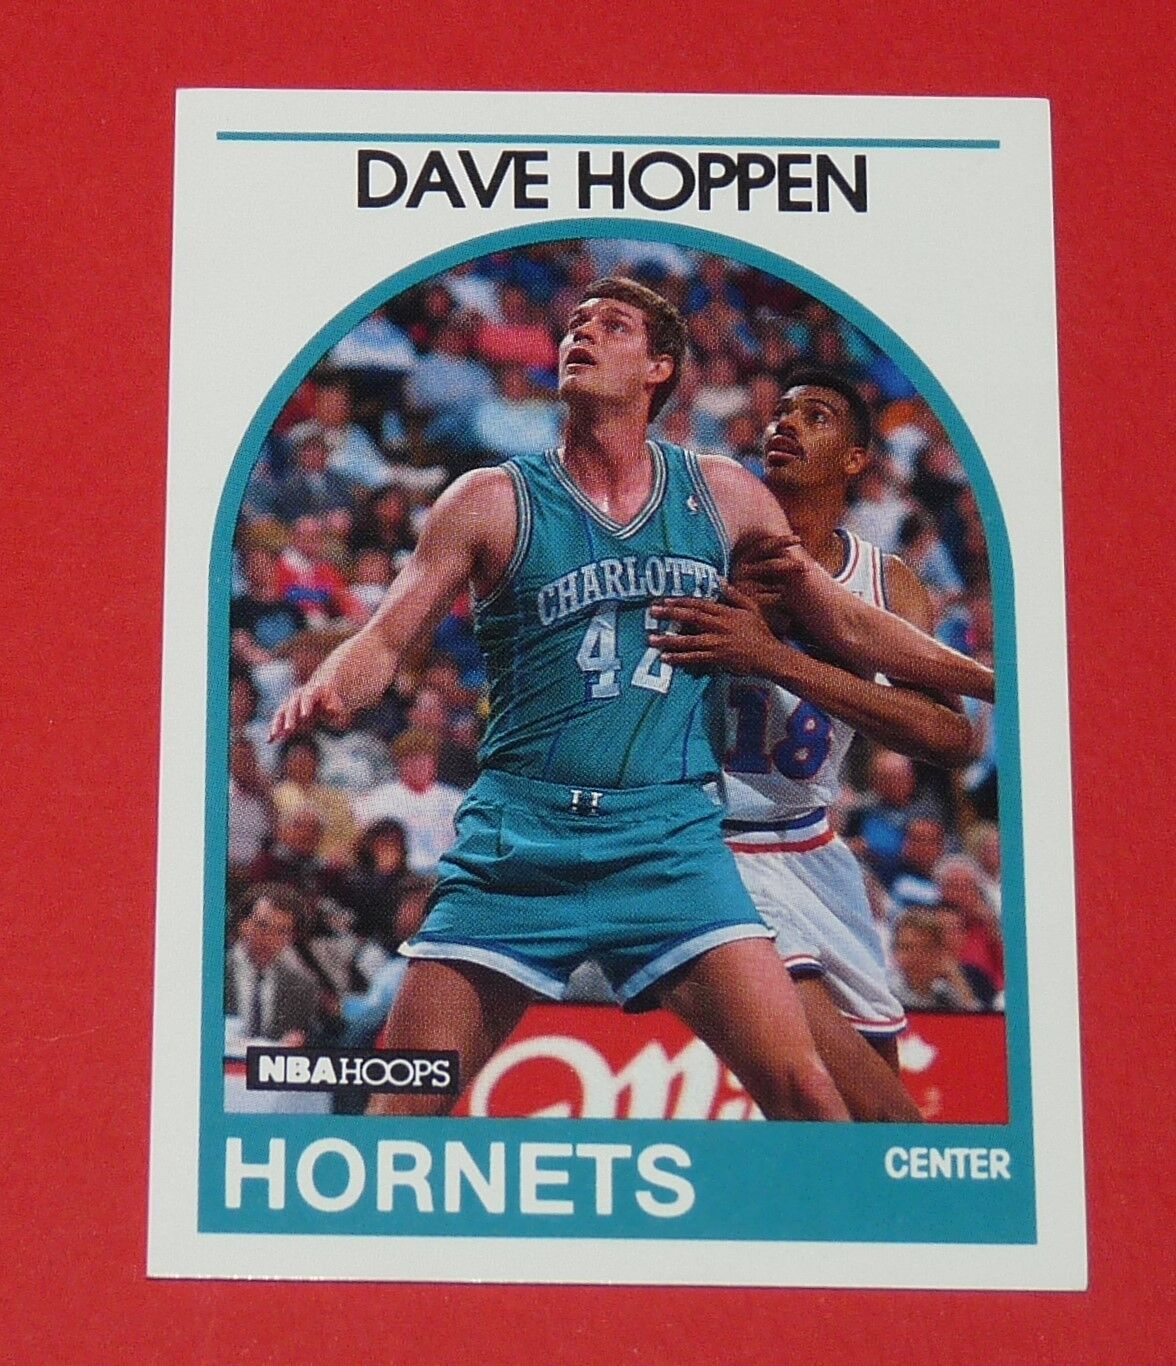 # 99 DAVE HOPPEN CHARLOTTE HORNETS 1989 NBA HOOPS BASKETBALL CARD